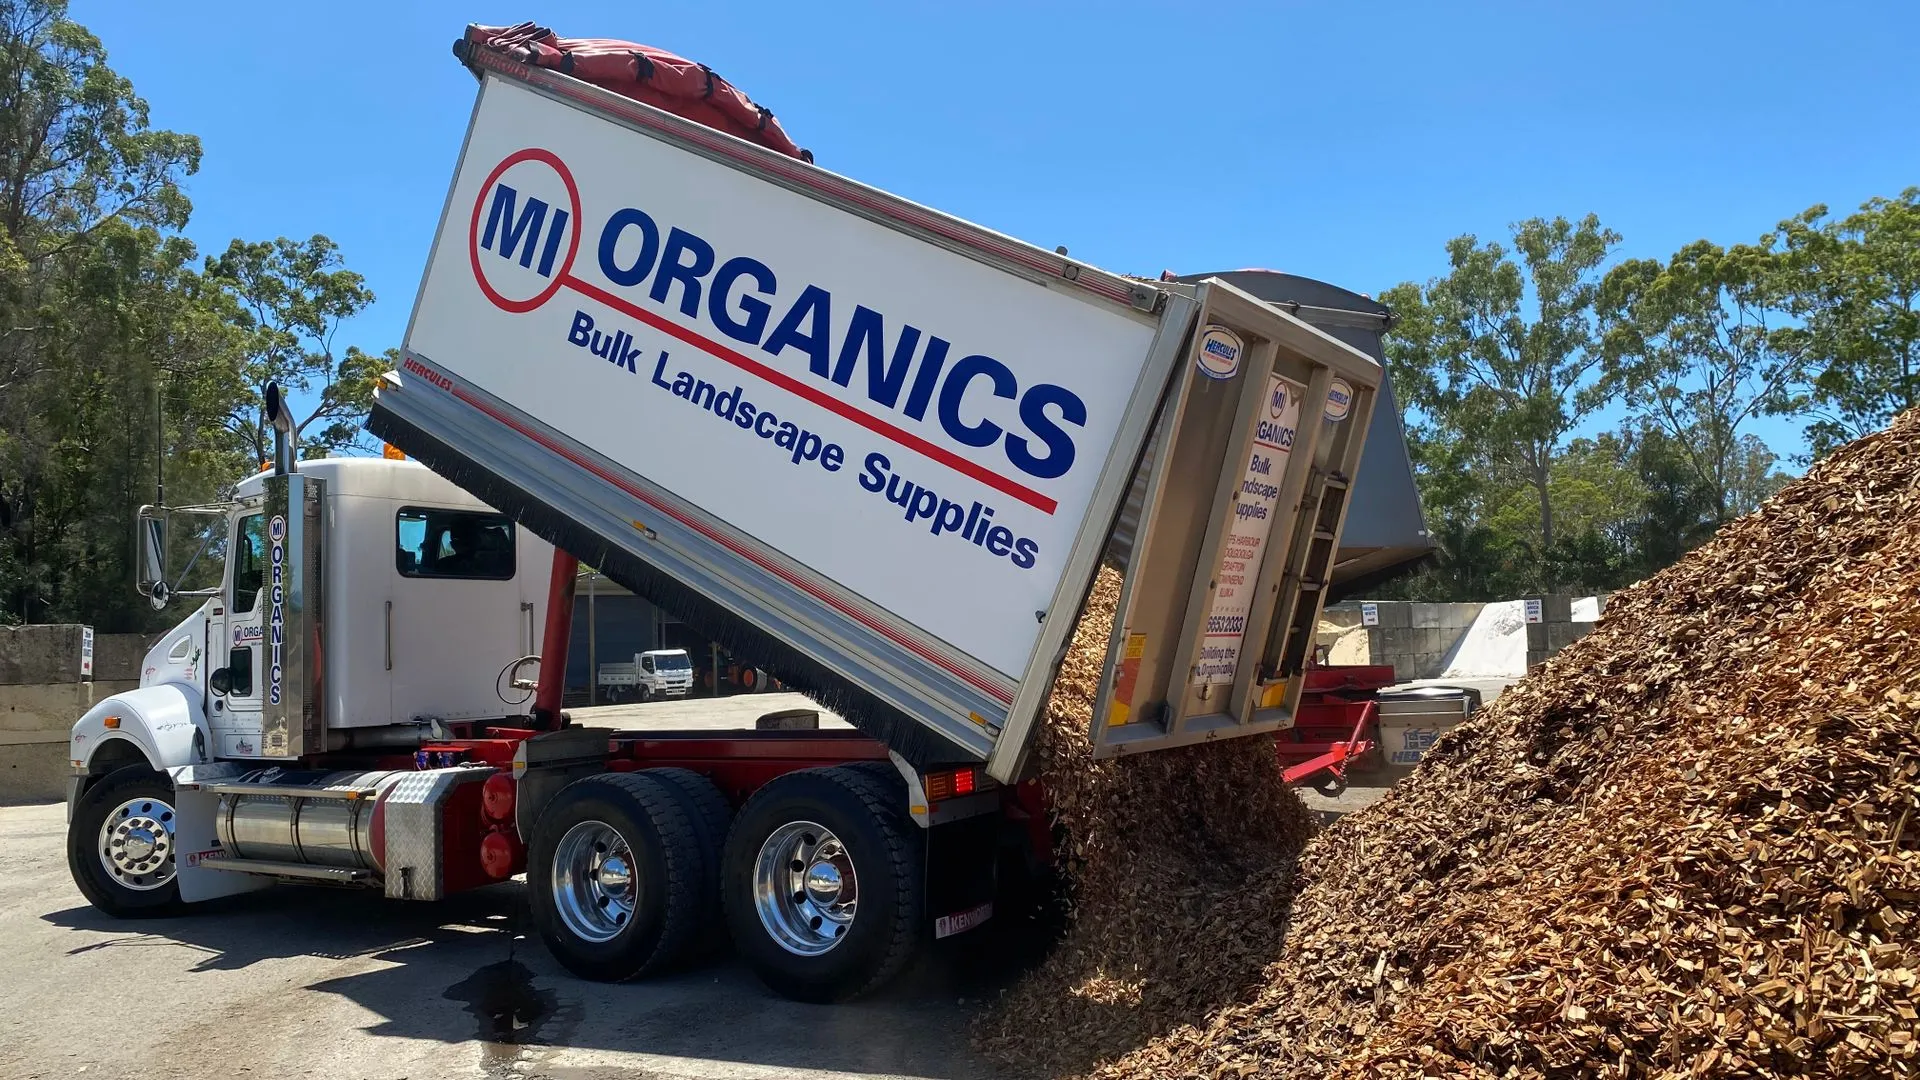 mi organics bulk garden supplies delivery in Coffs Harbour, Grafton, Townsend, Nambucca and Woolgoolga